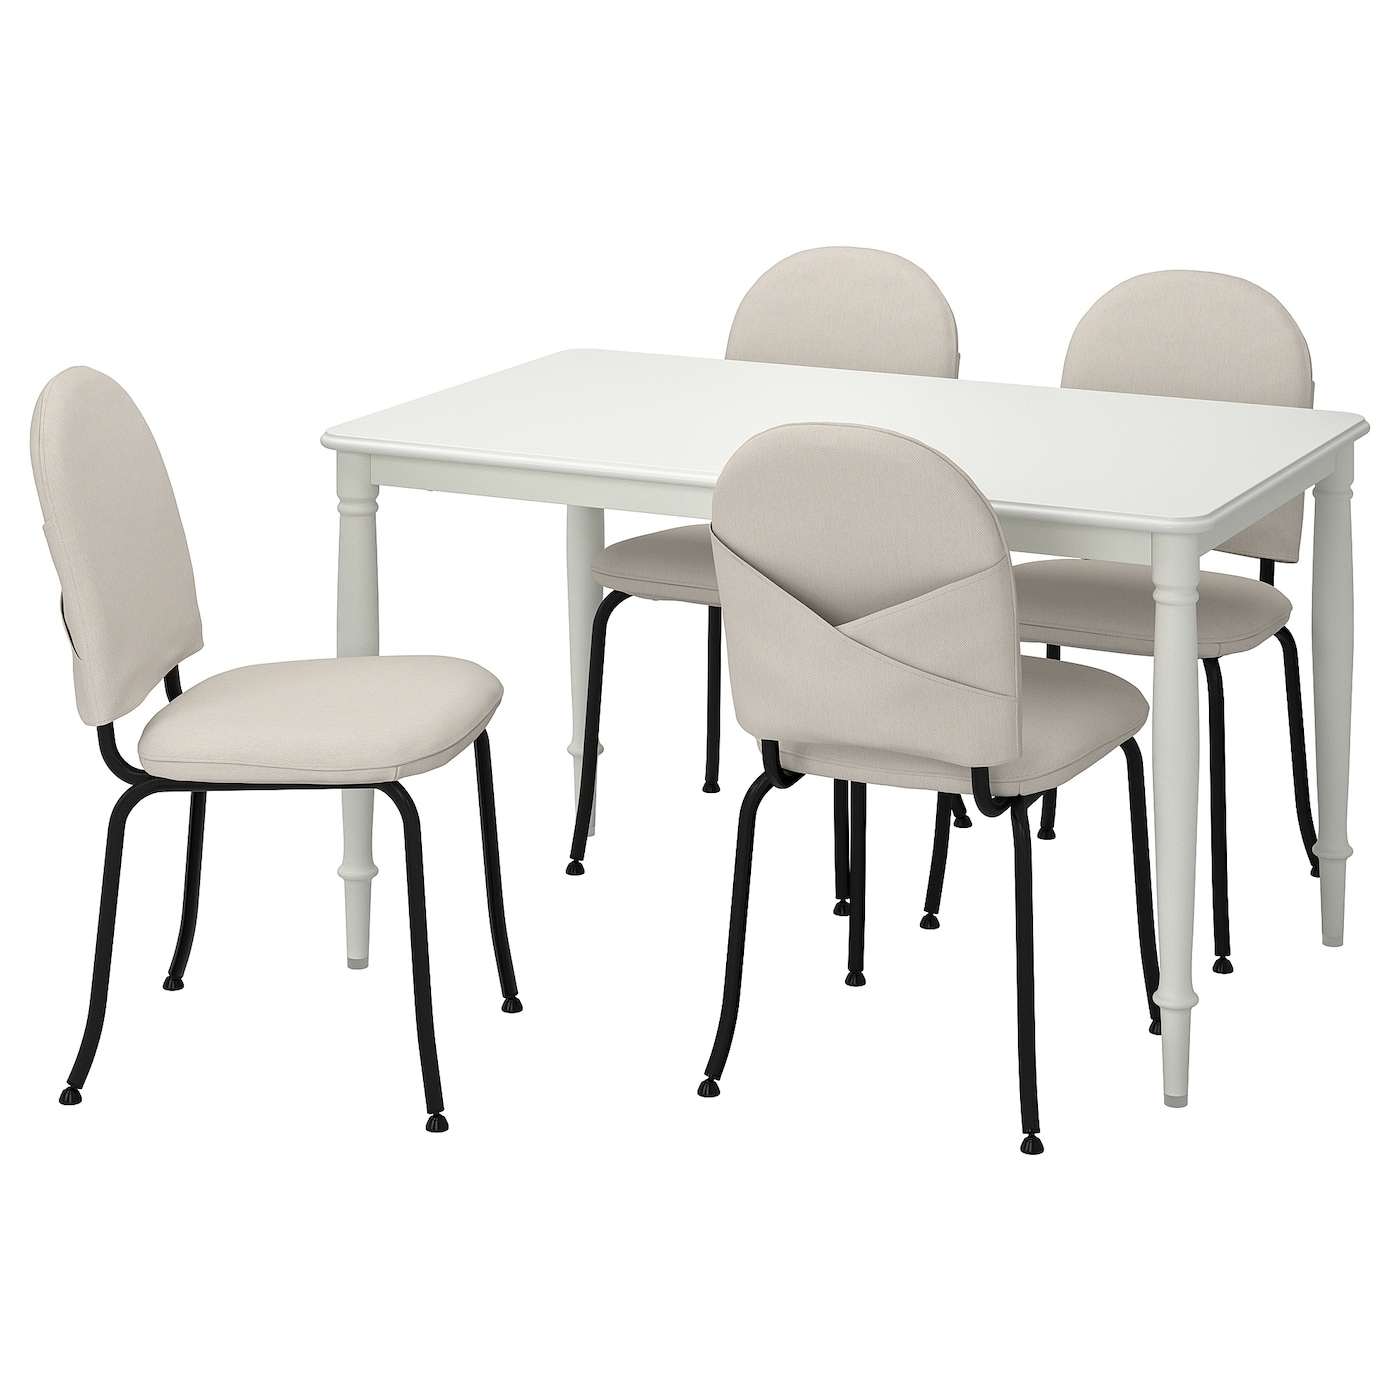 Стол и 4 стула - DANDERYD / EBBALYCKE IKEA/ ДАНДЭРЮД / ЭББАЛЮККЕ ИКЕА, 130х75/87х38  см, белый